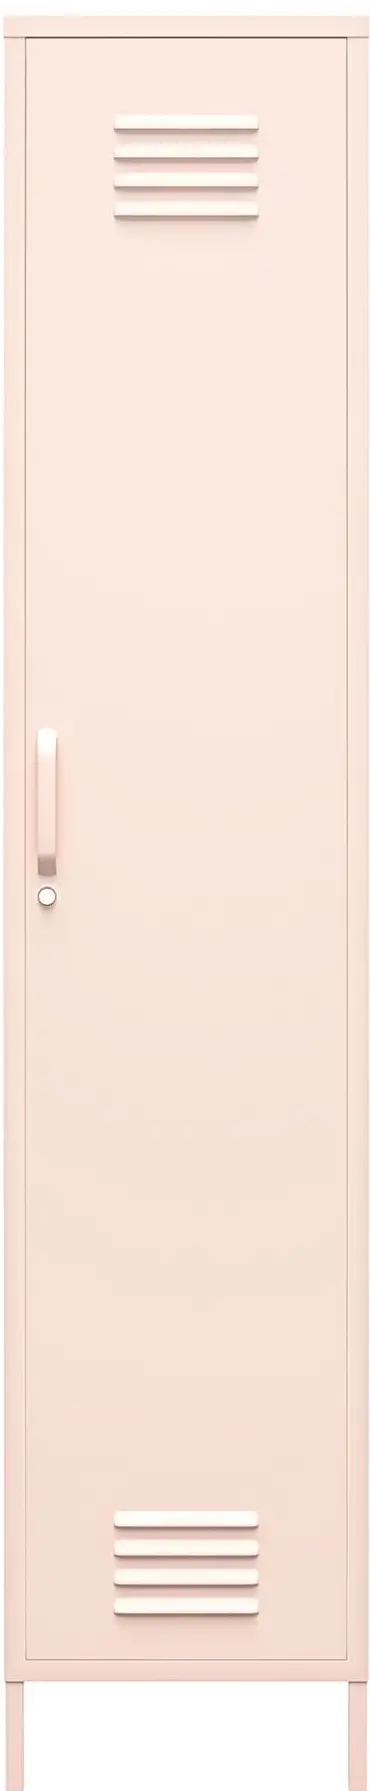 Mission Pink Single Metal Locker Storage Cabinet